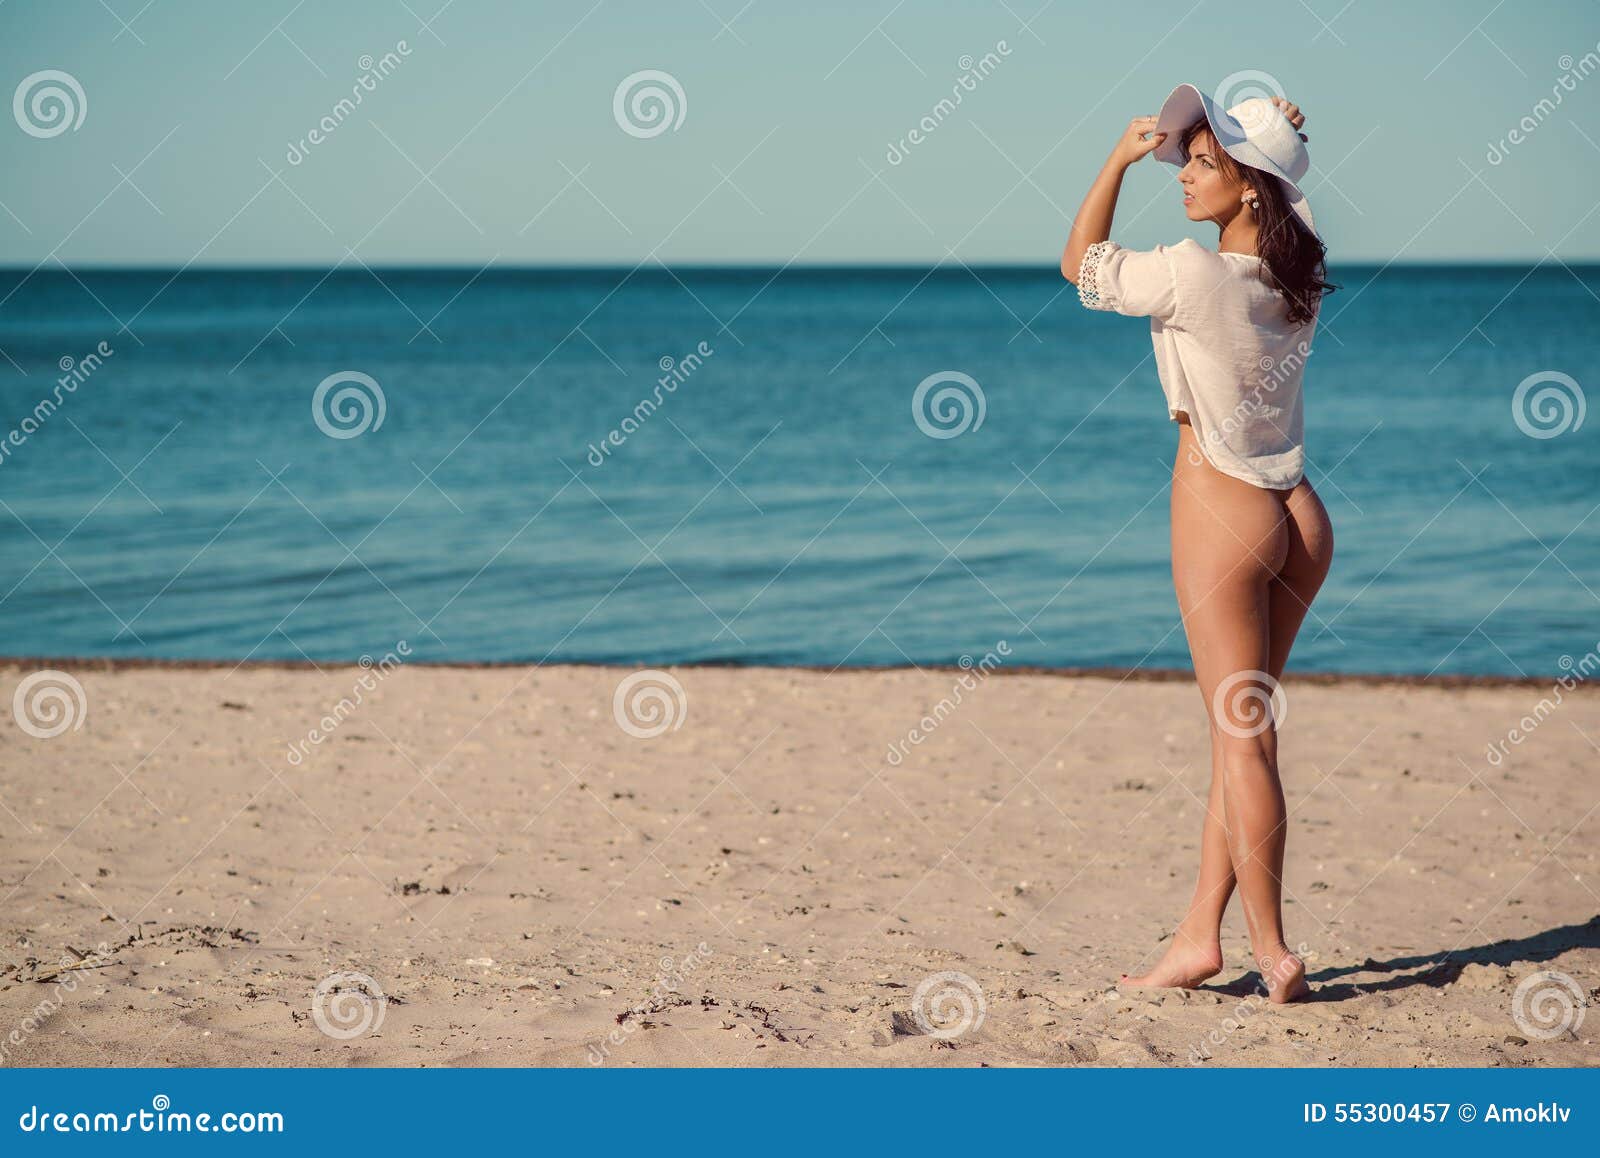 candice prado add naked women walking on beach photo